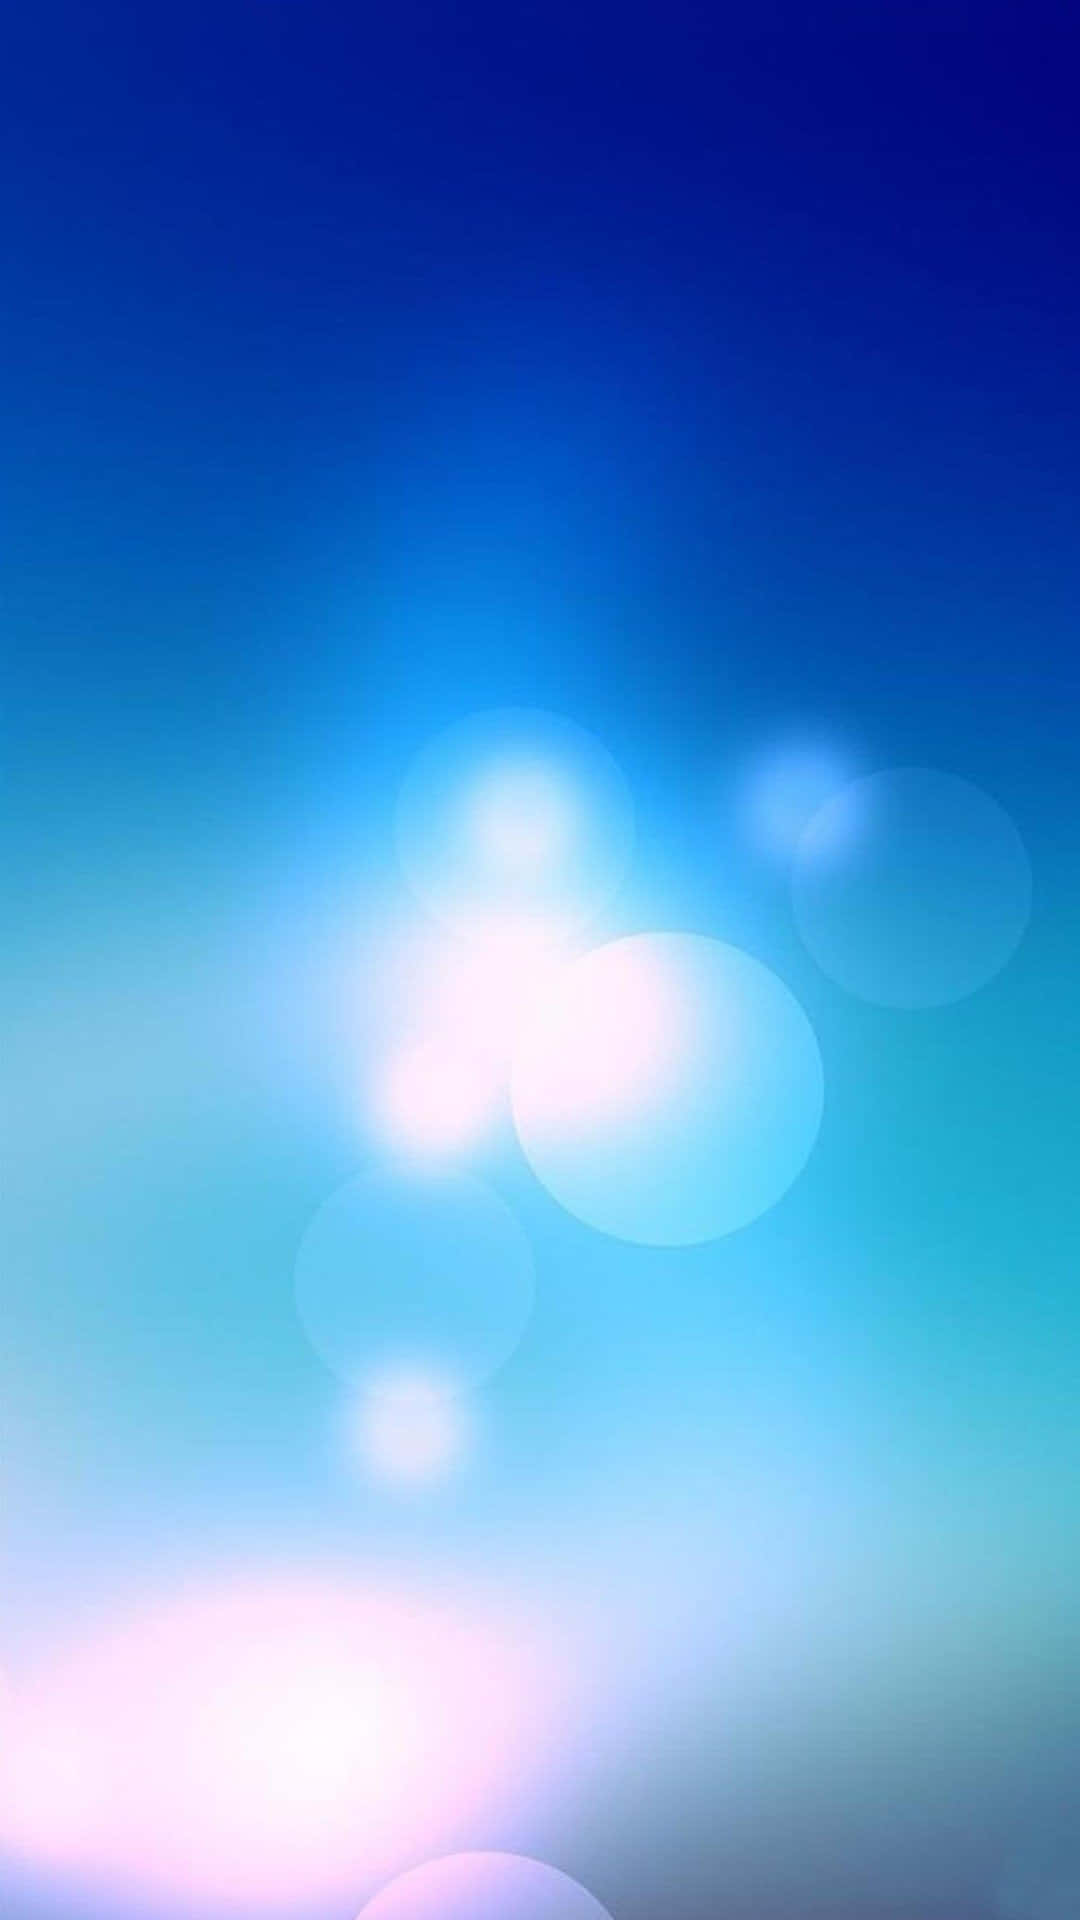 Transparent Light Reflection In Royal Blue Background